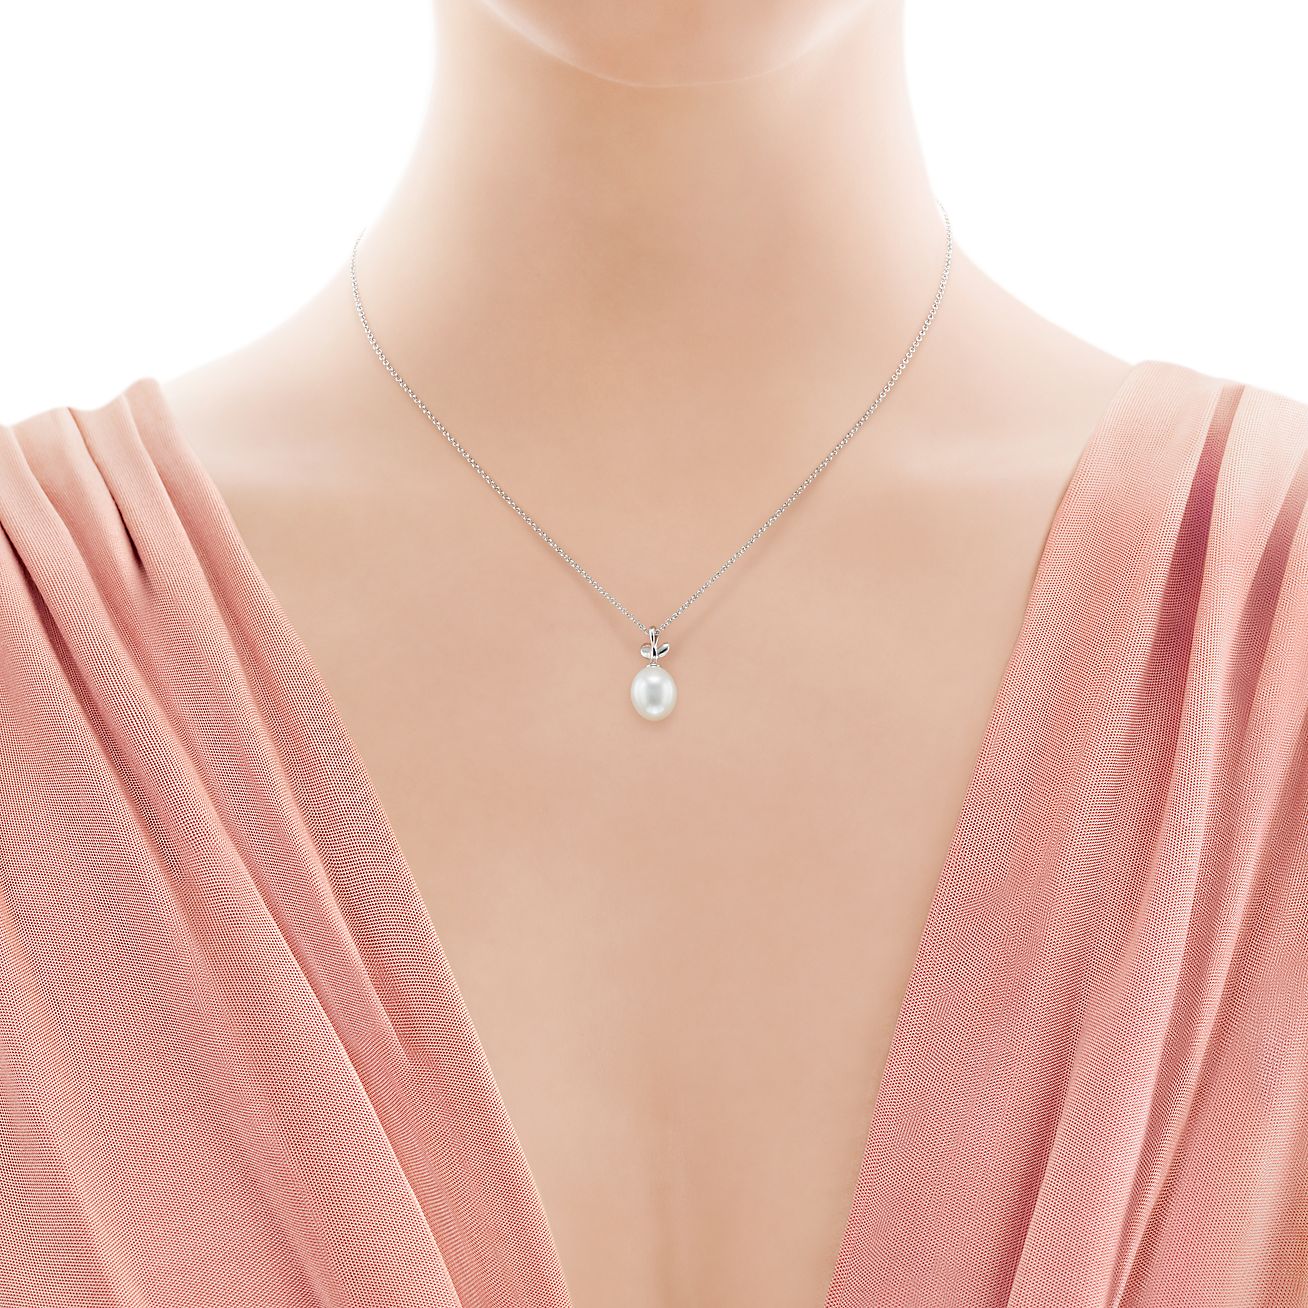 tiffany olive leaf pearl pendant